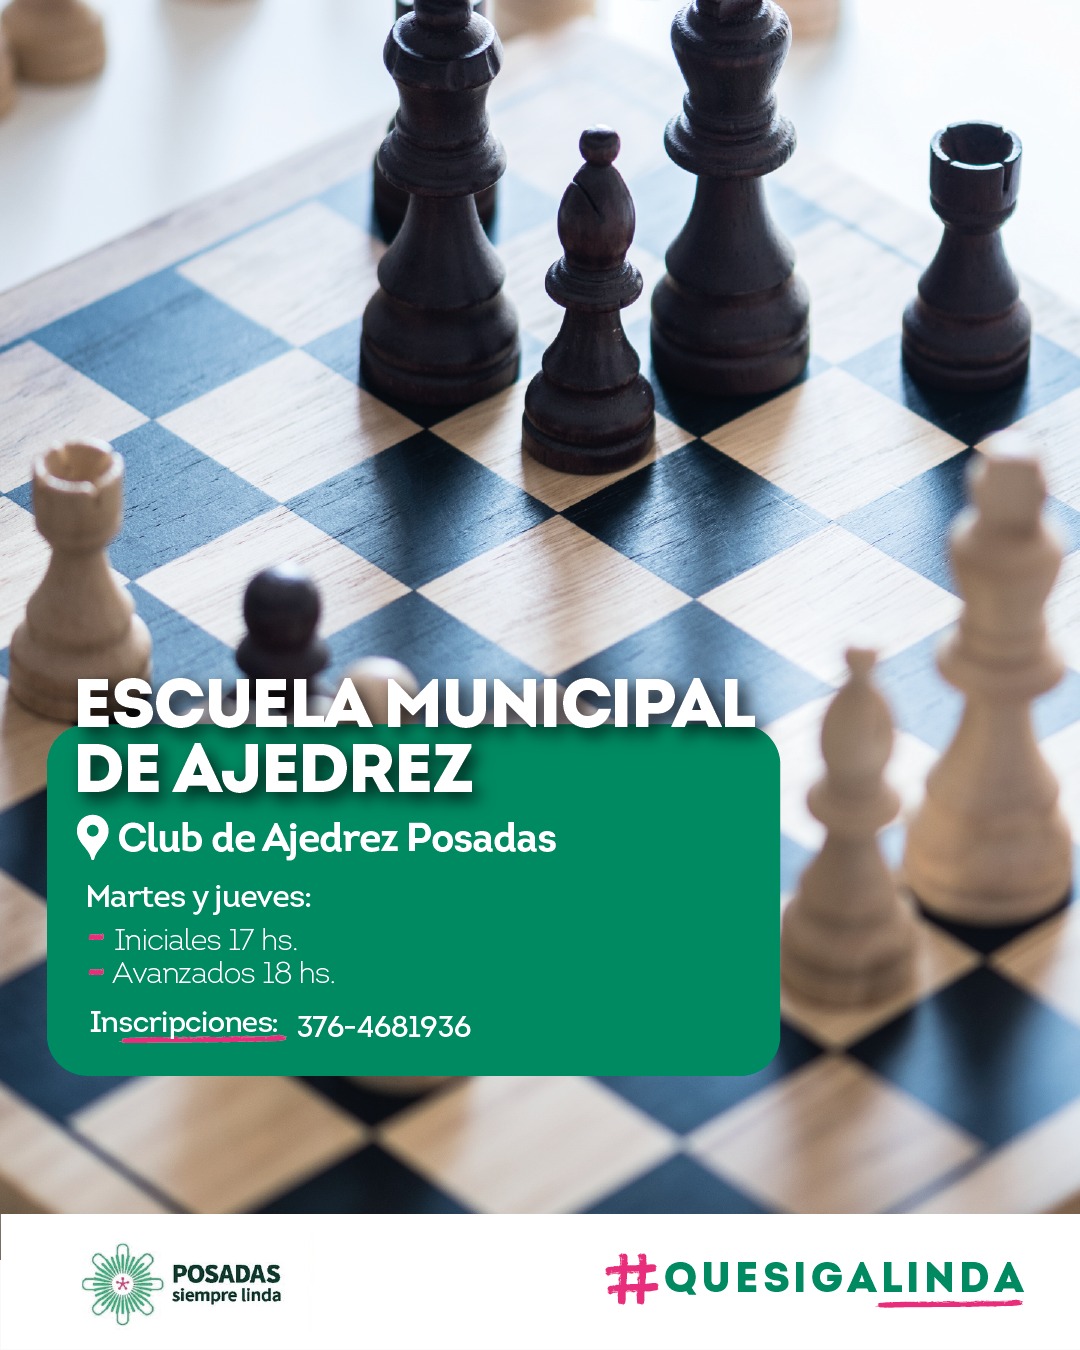 Escuela Municipal de Ajedrez inicia sus actividades